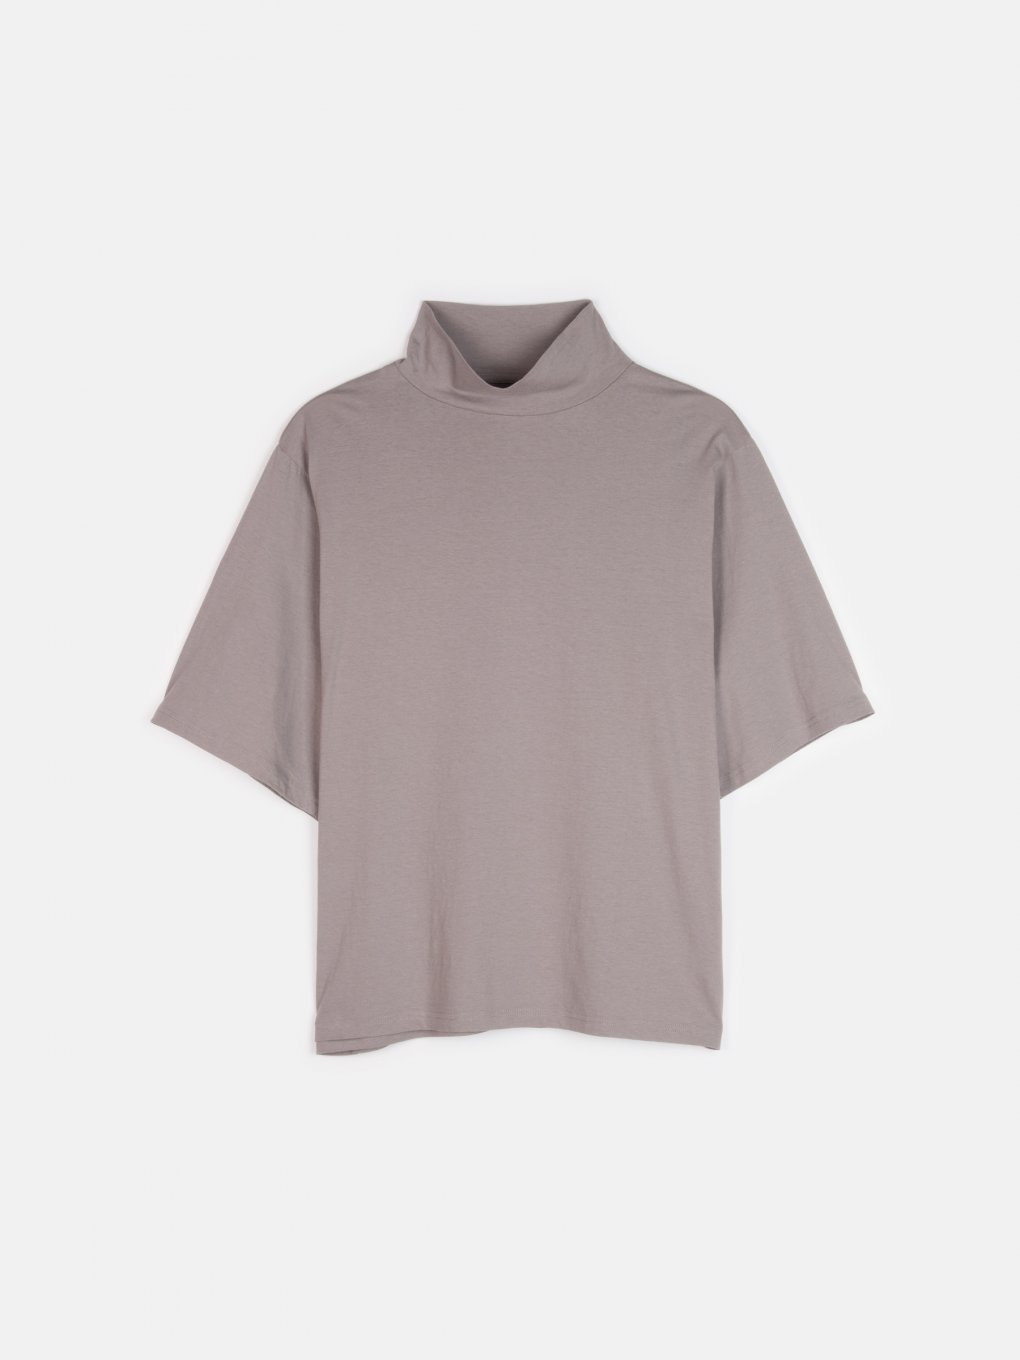 Plus size basic cotton high neck t-shirt